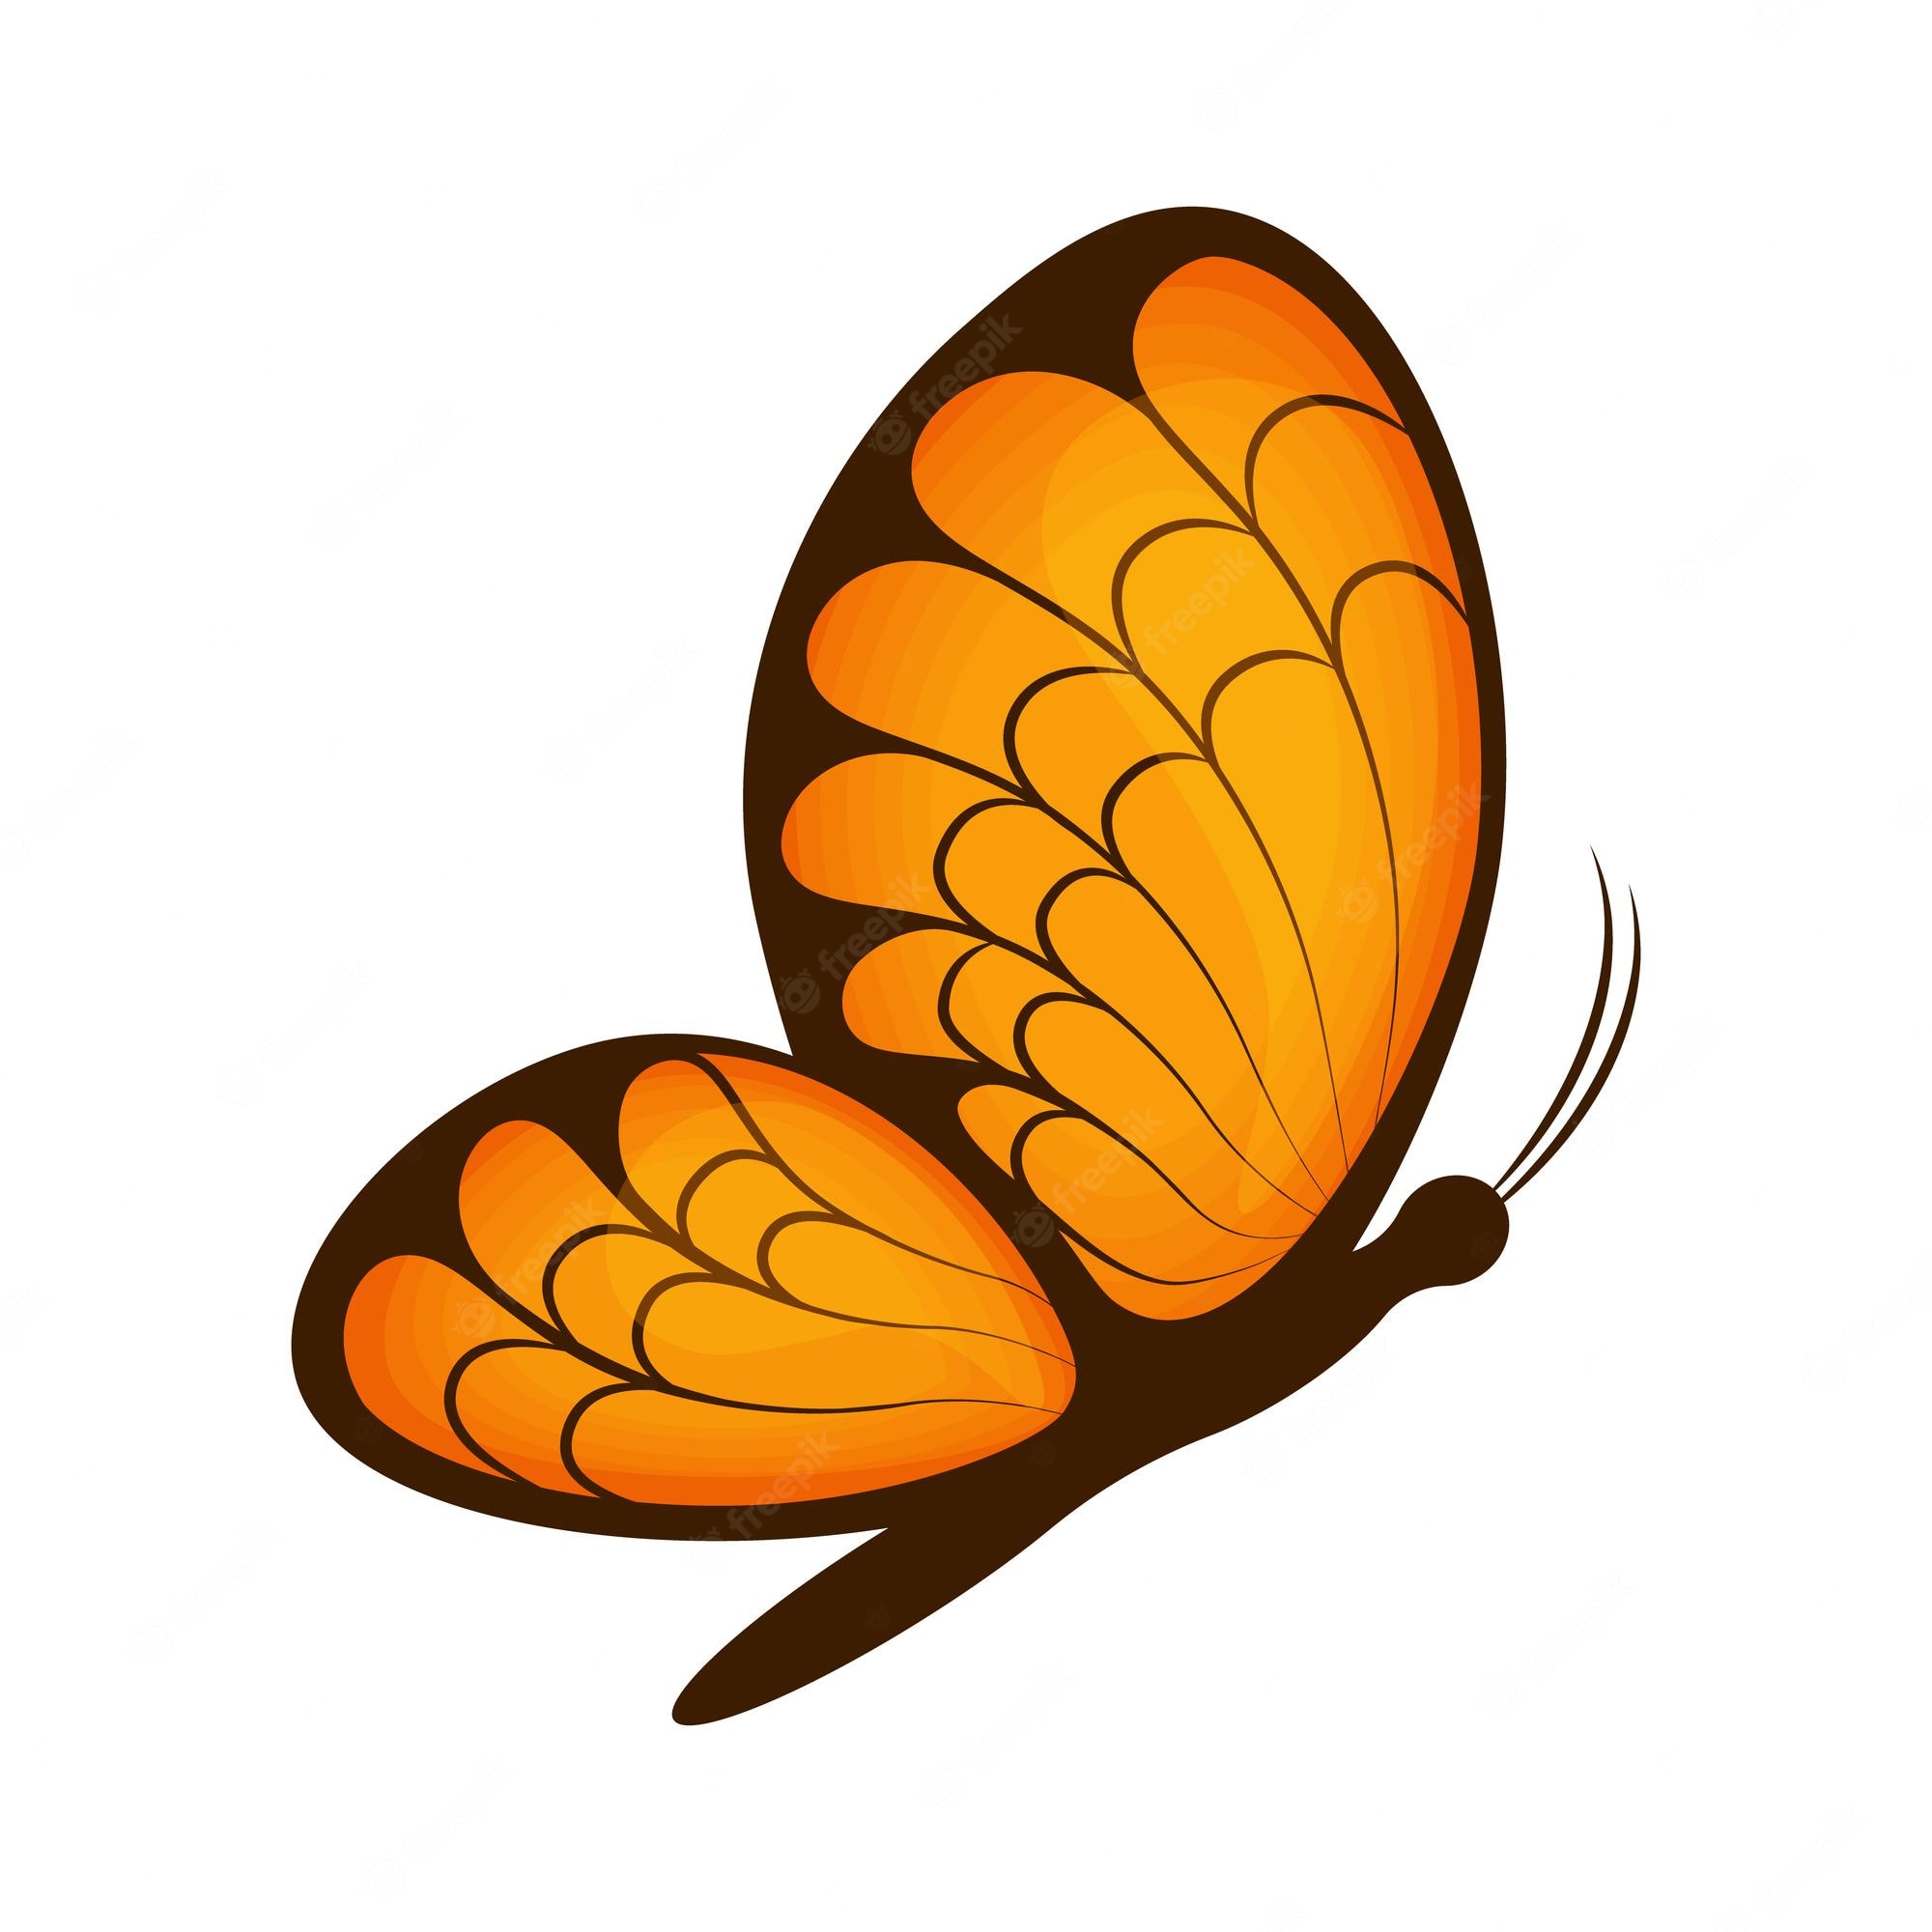 Monarch Butterfly Cartoon Image